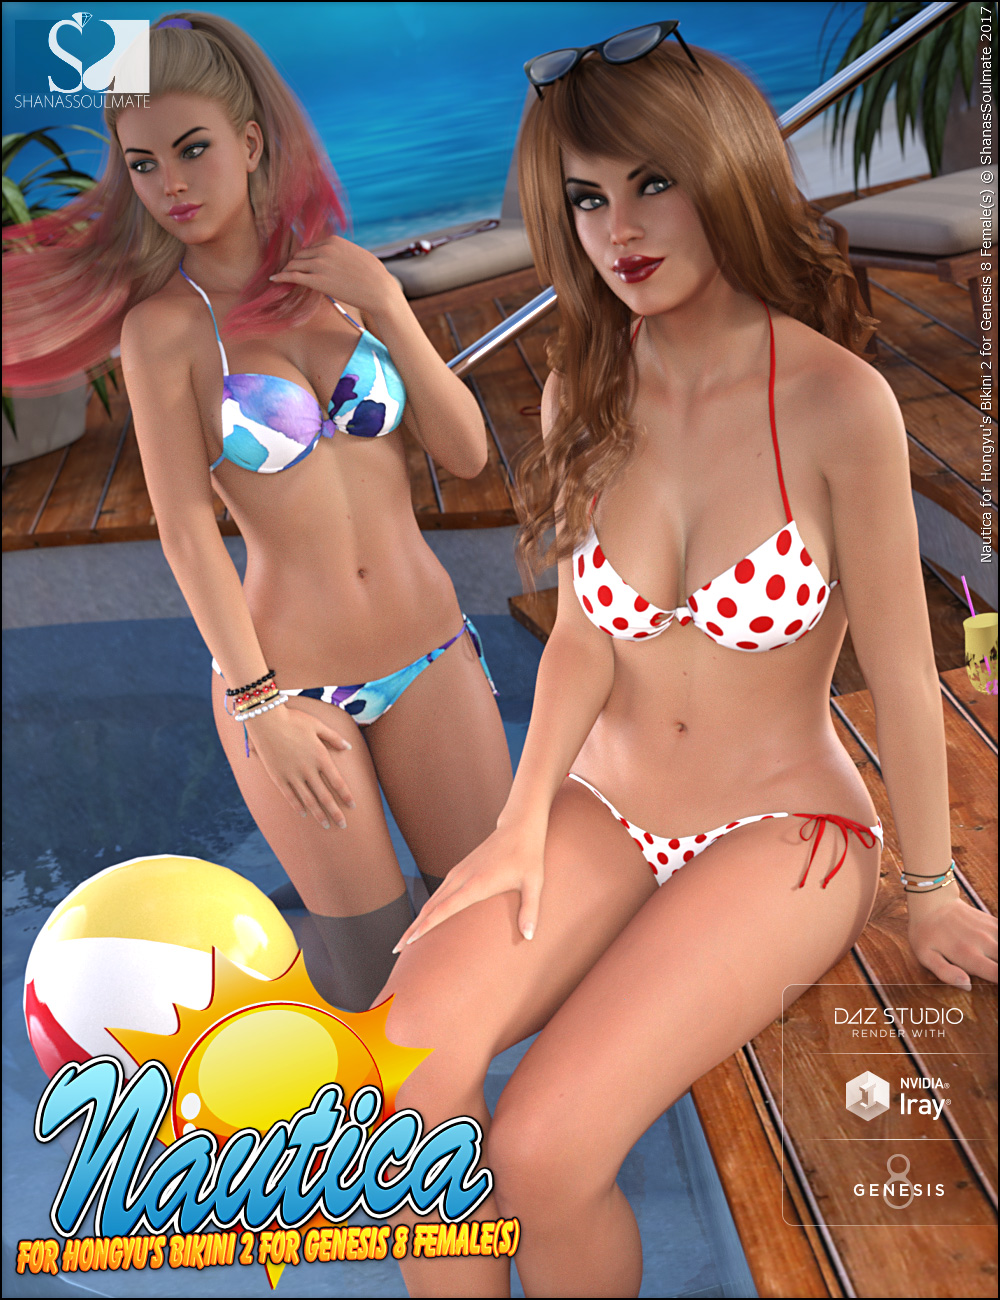 Hongyu's Bikini 2 Nautica Textures by: ShanasSoulmate, 3D Models by Daz 3D